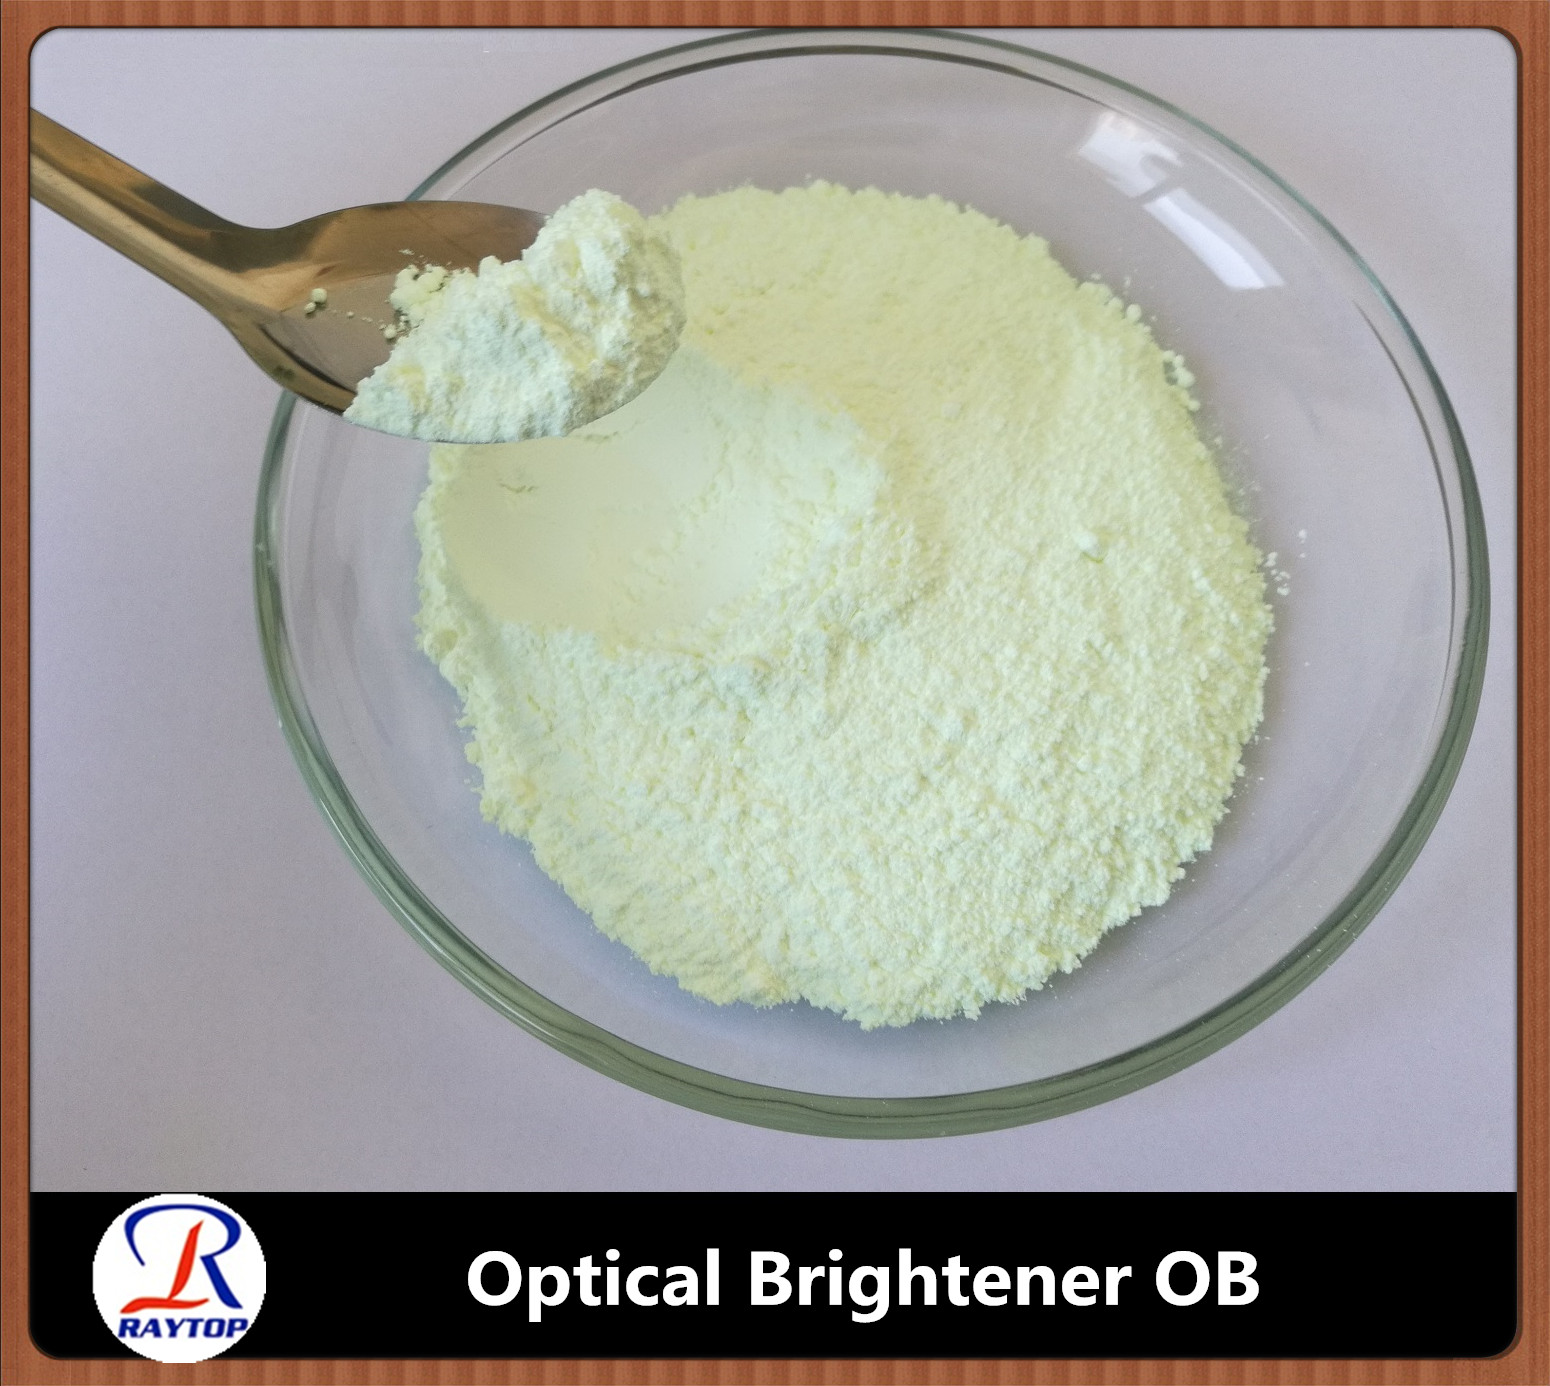 Optical brightener uses